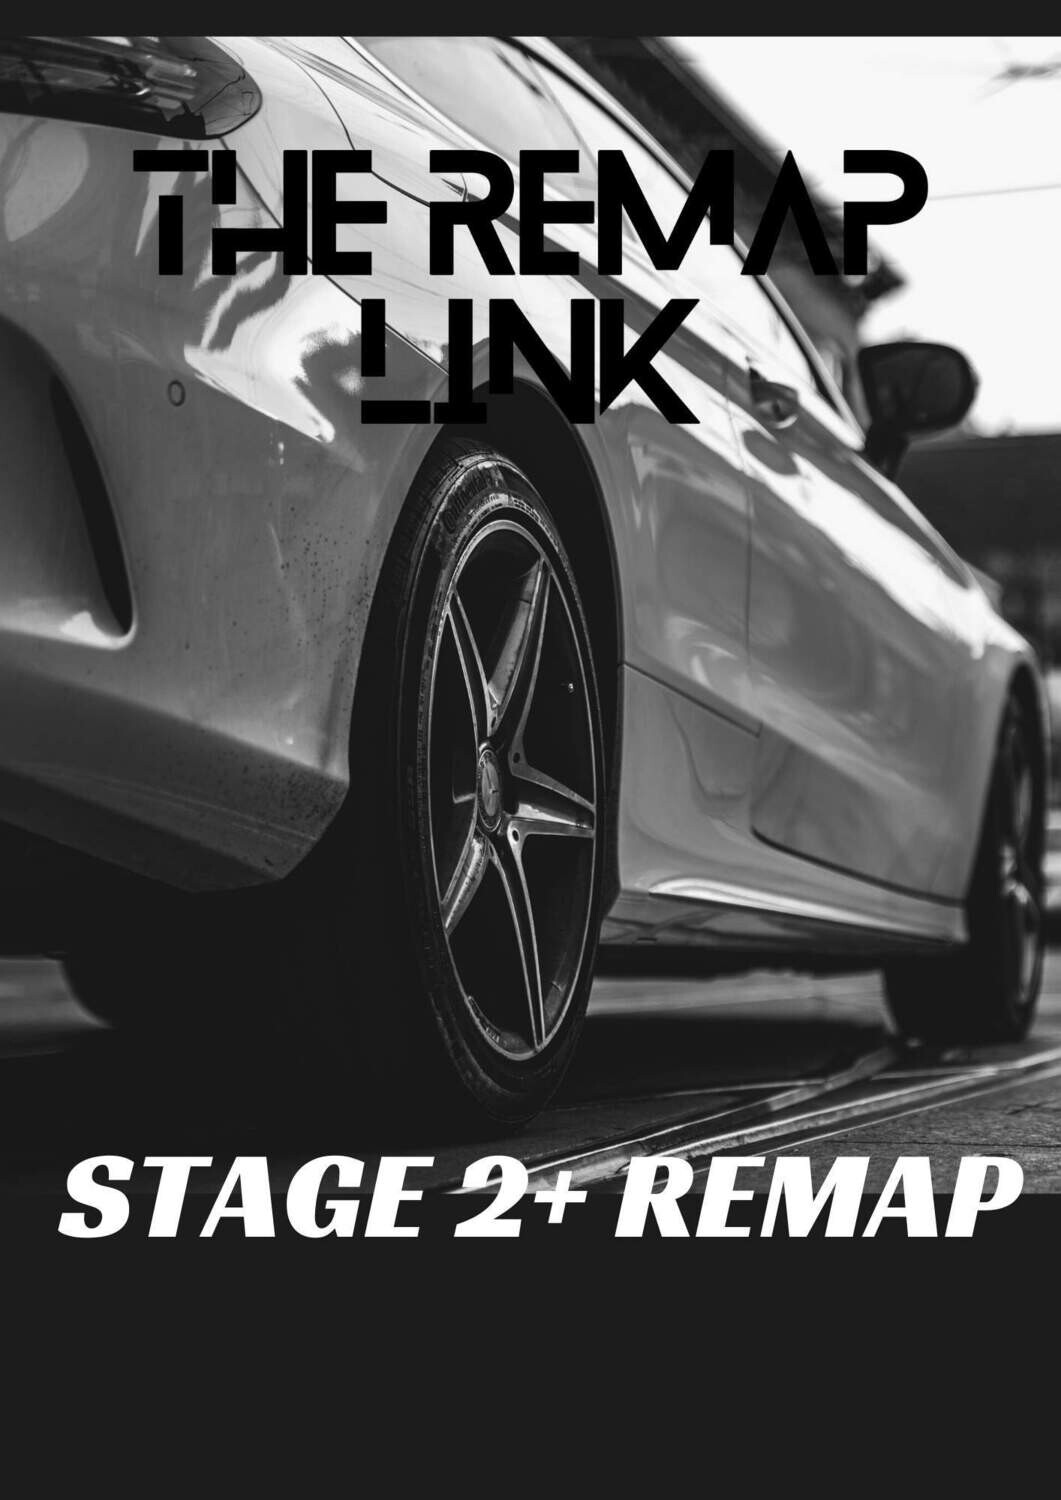 Stage 2+ Remap ECU Tuning